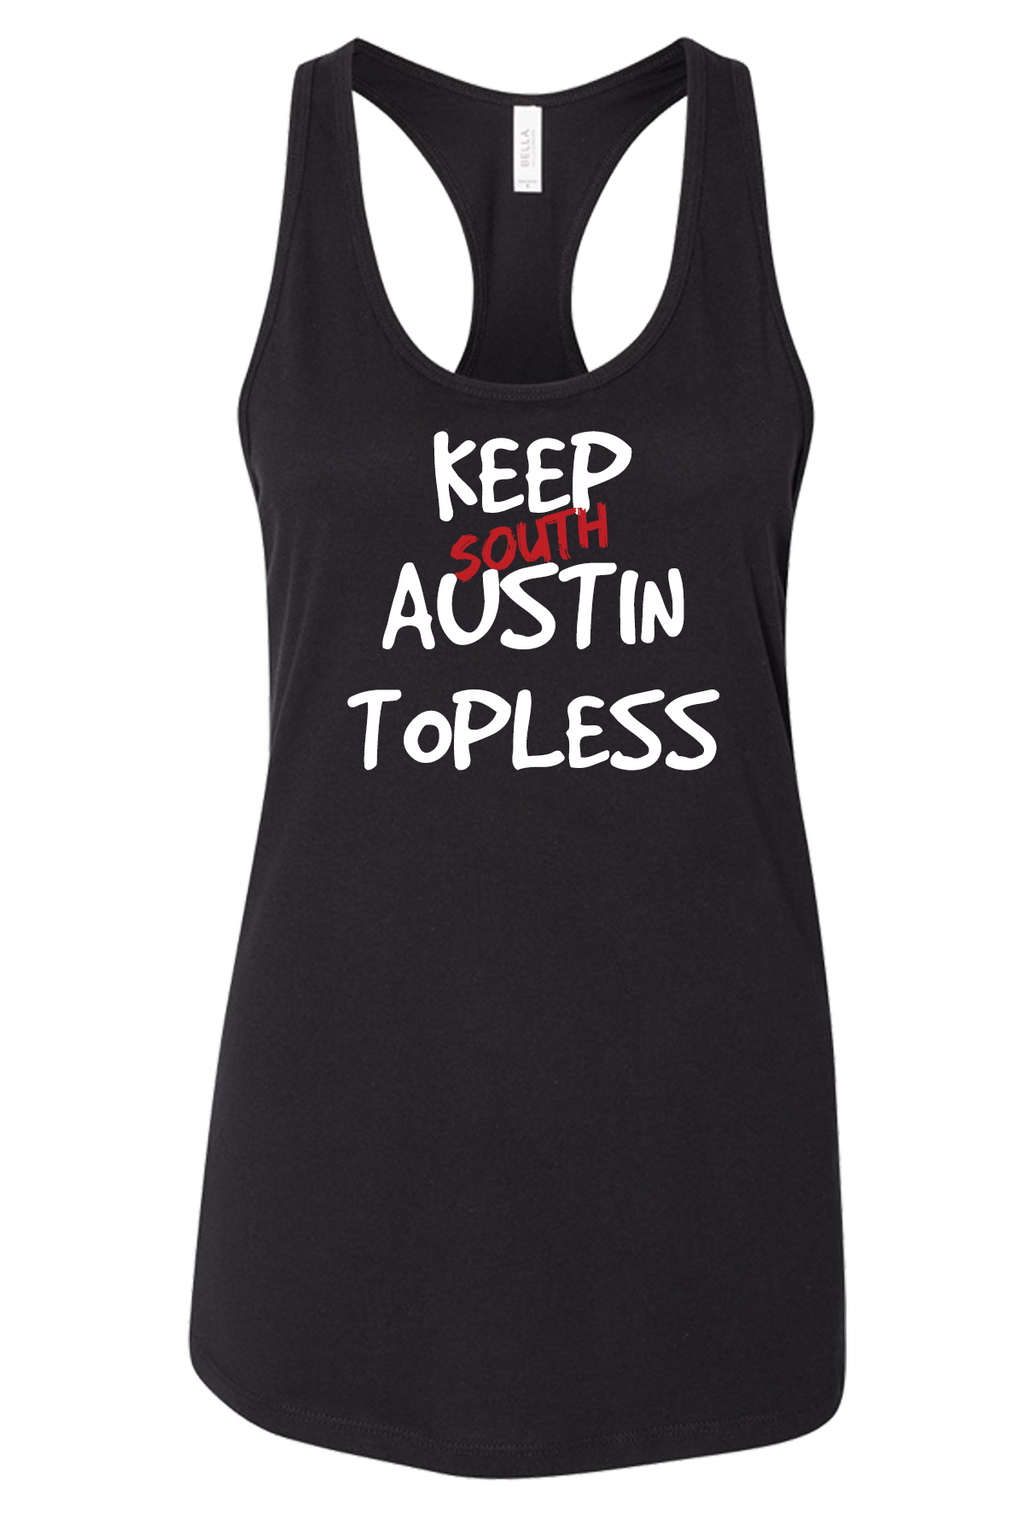 Keep South Austin Topless Women's Tank